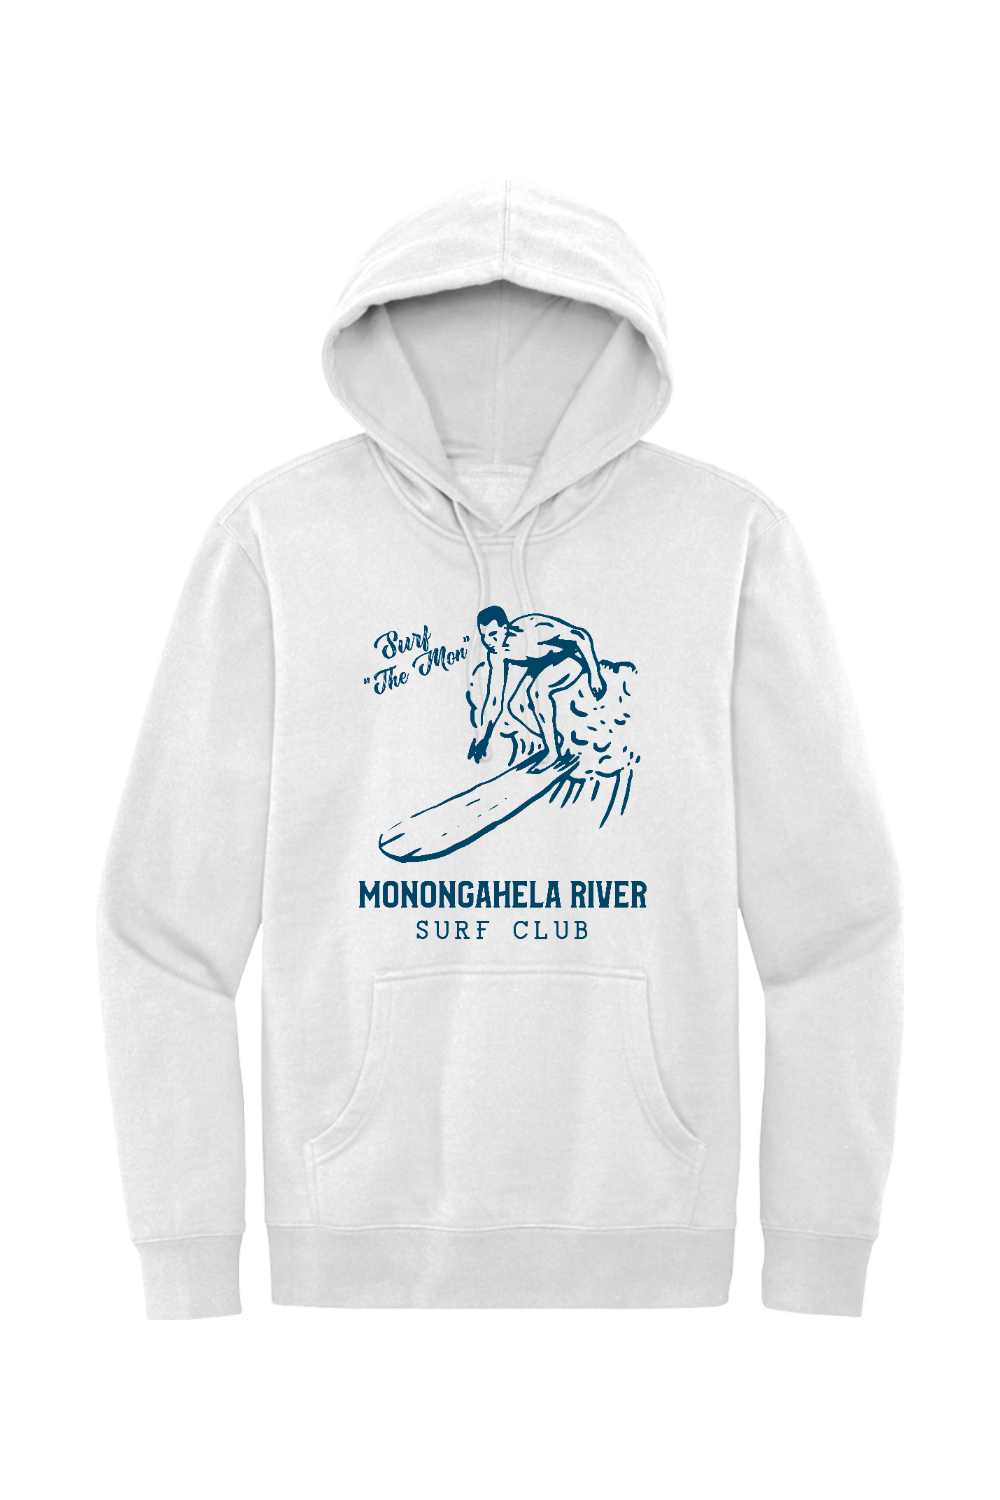 Monongahela River Surf Club - Fleece Hoodie - Yinzylvania